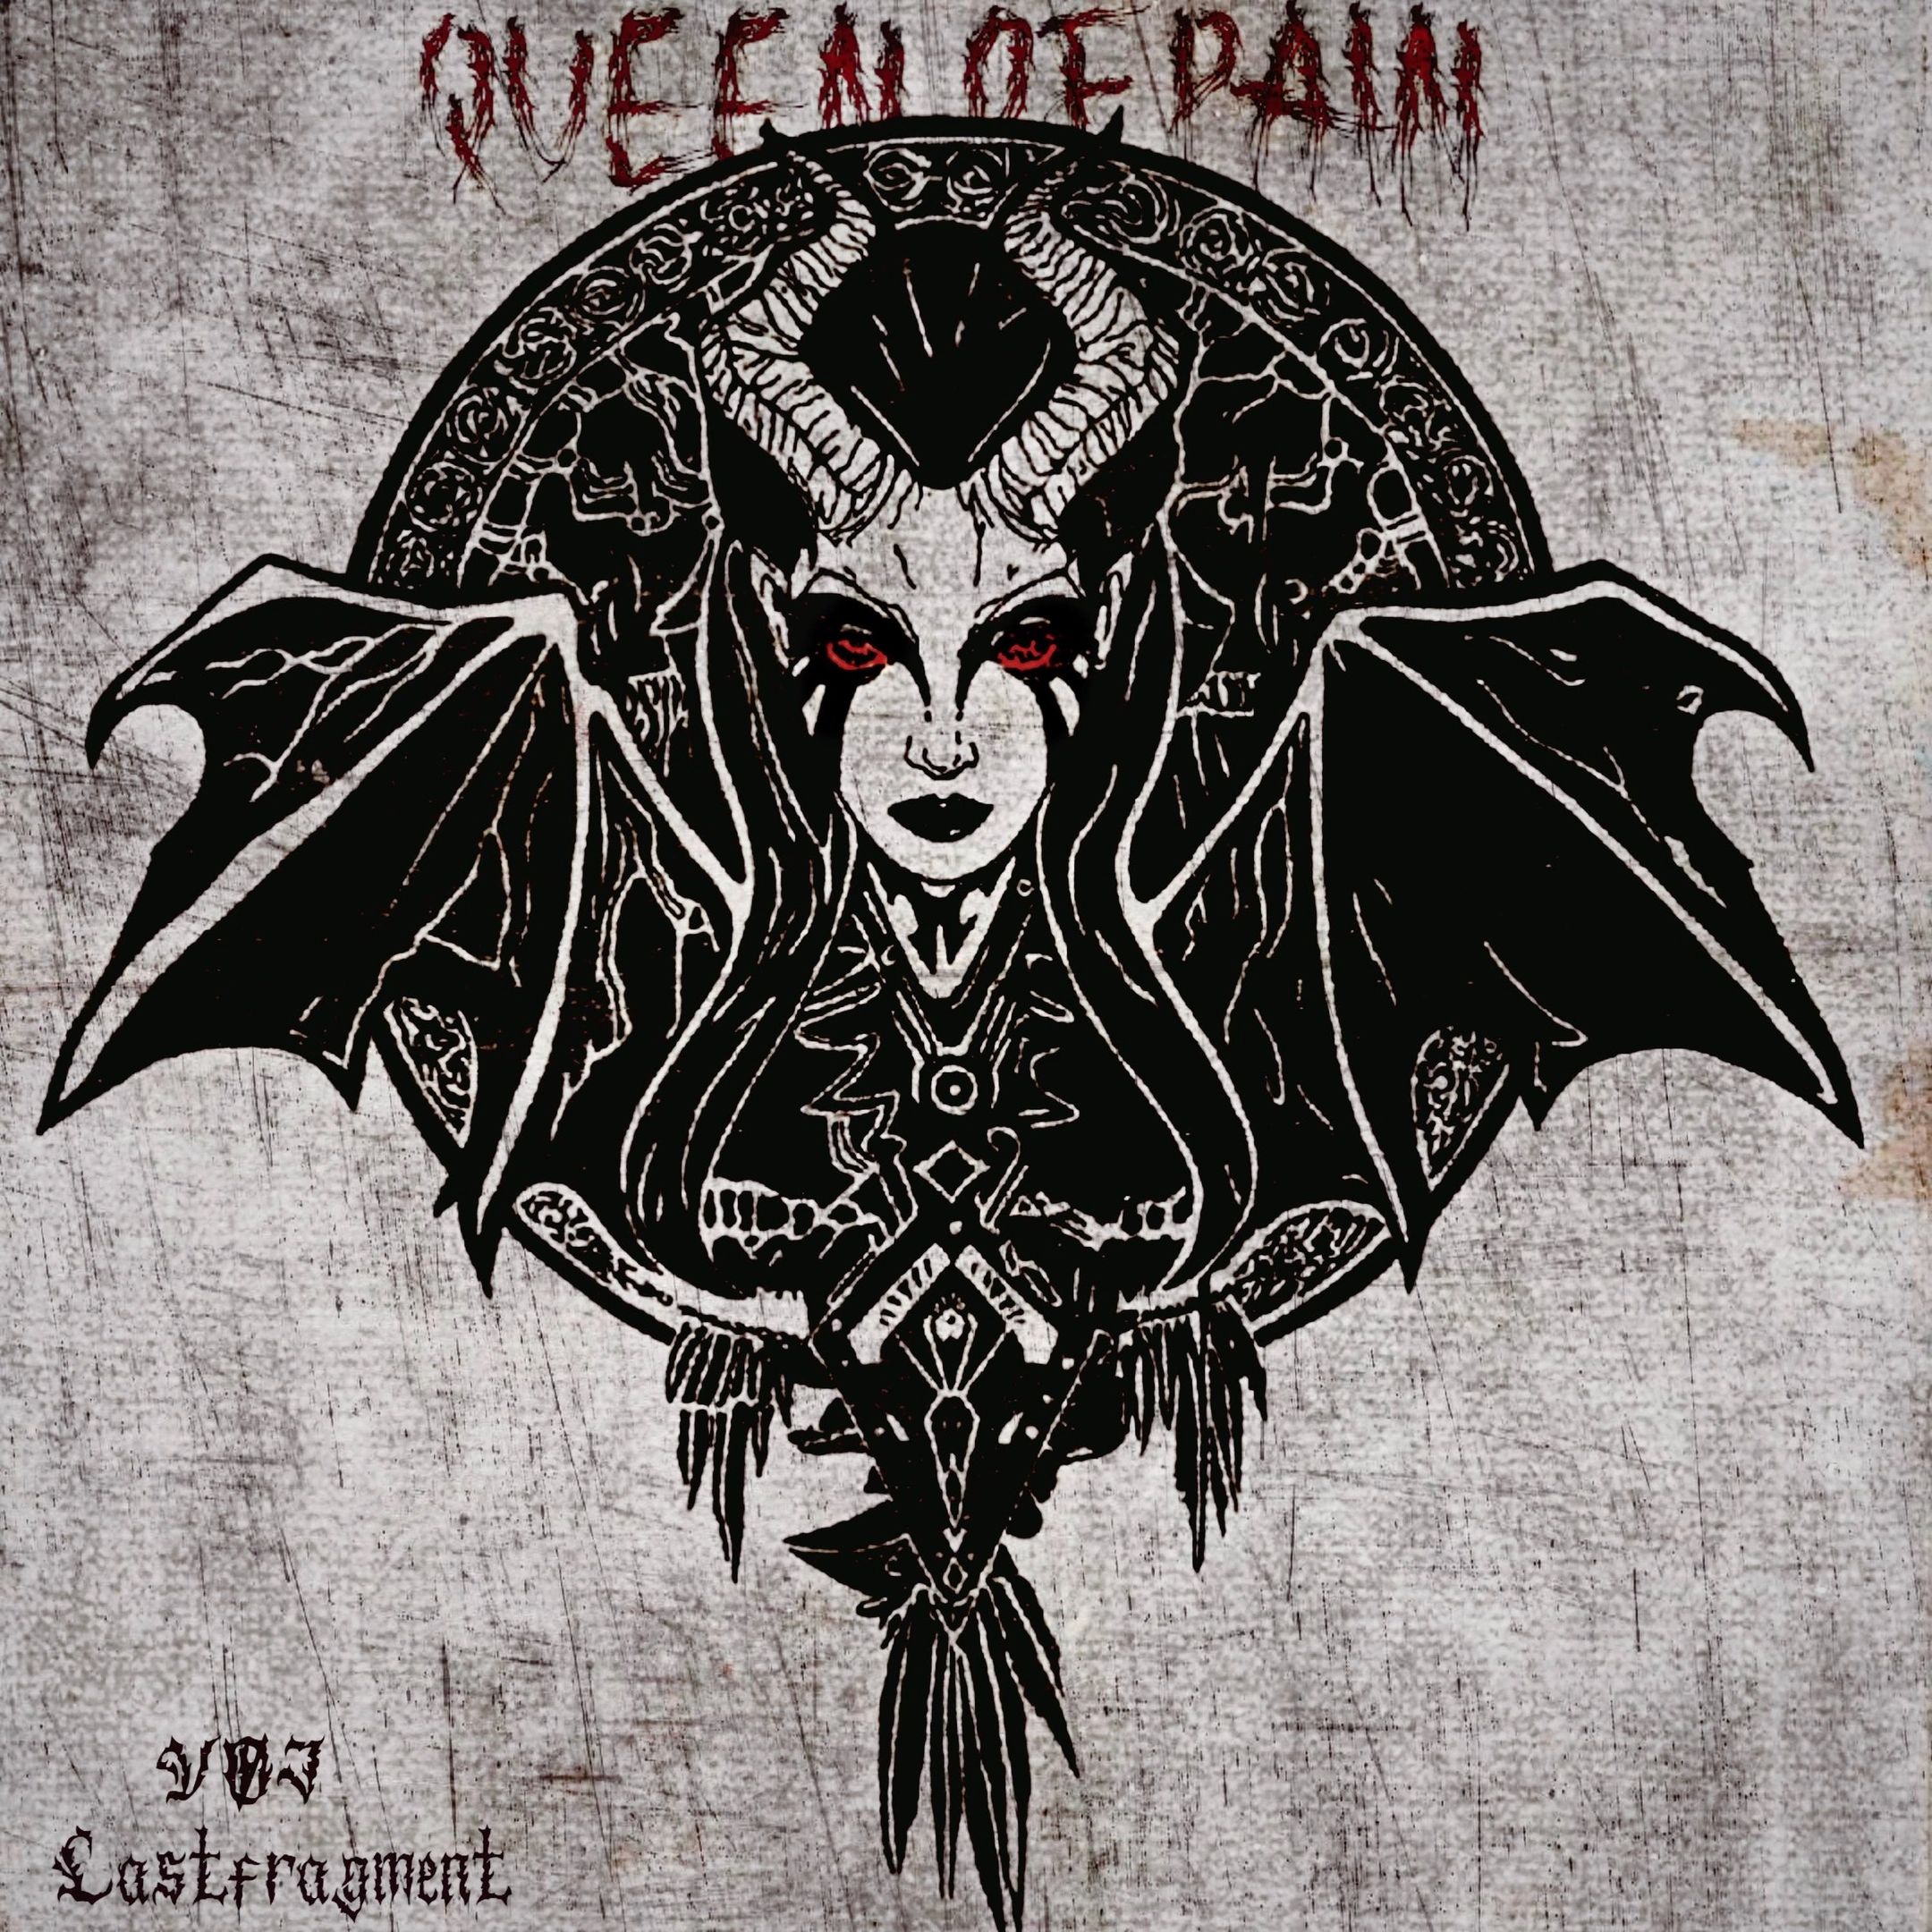 Unduh VØJ & Lastfragment - Queen of Pain